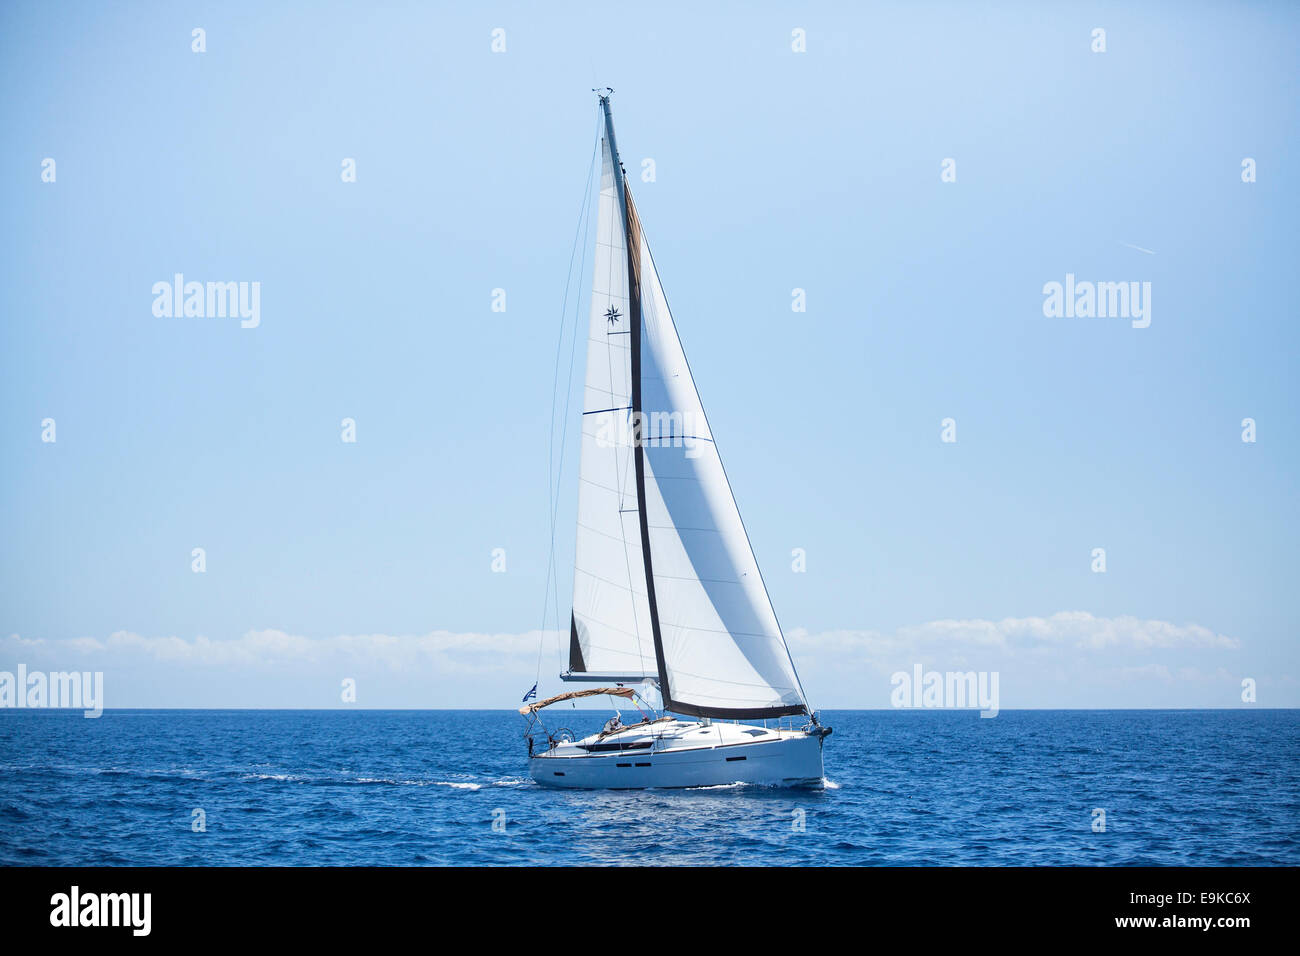 Romantischen Segelboot auf dem Meer fahren. Luxus-Yachten, Seereisen. Stockfoto